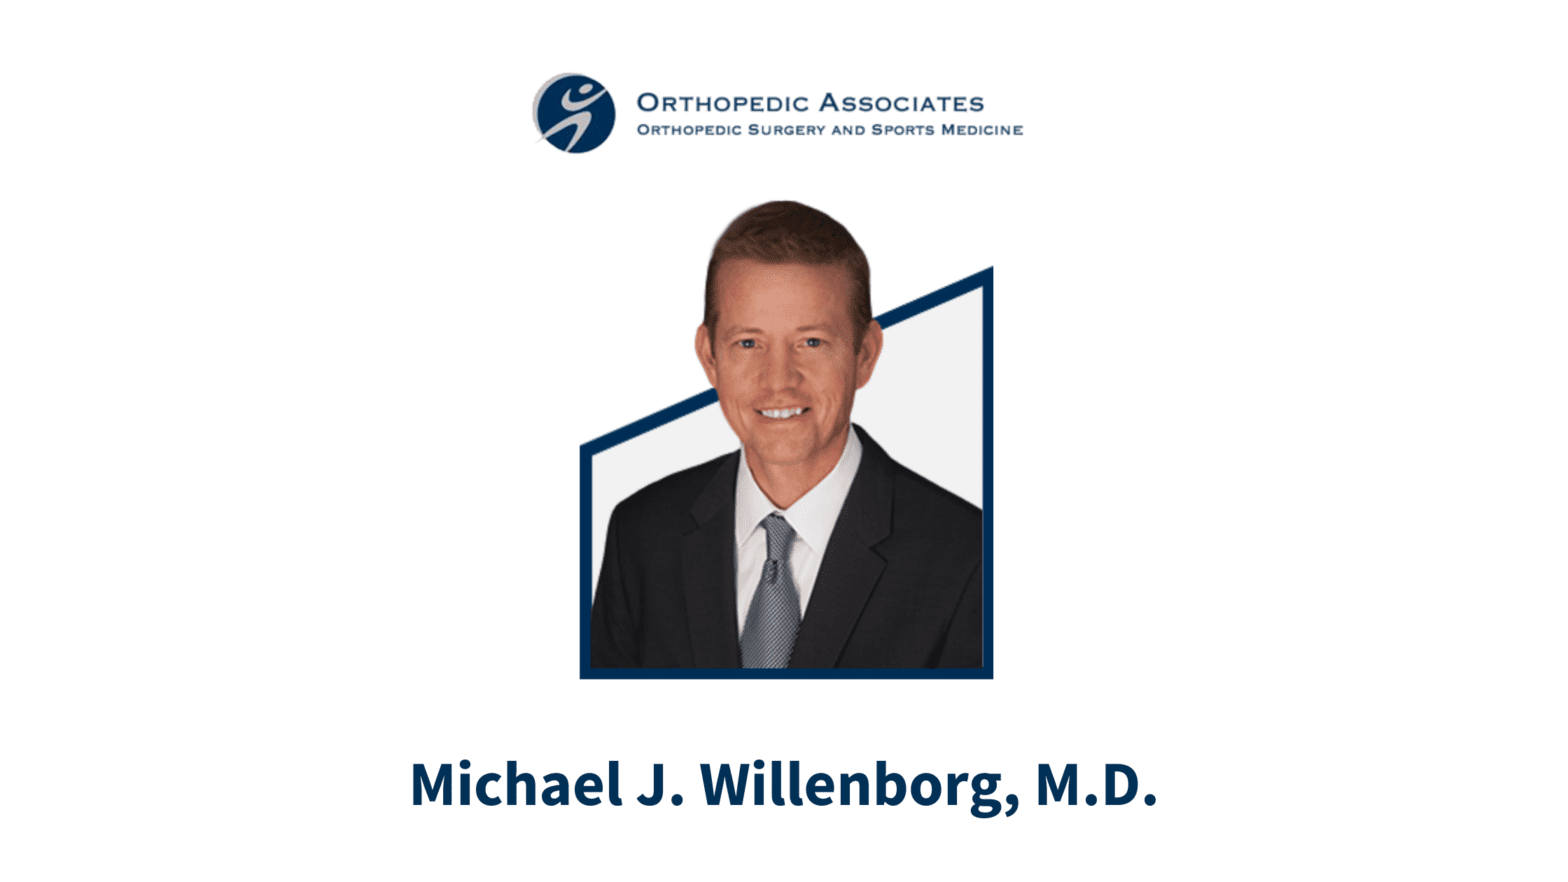 Orthopedic Surgeon Spotlight: Michael J. Willenborg, M.D.